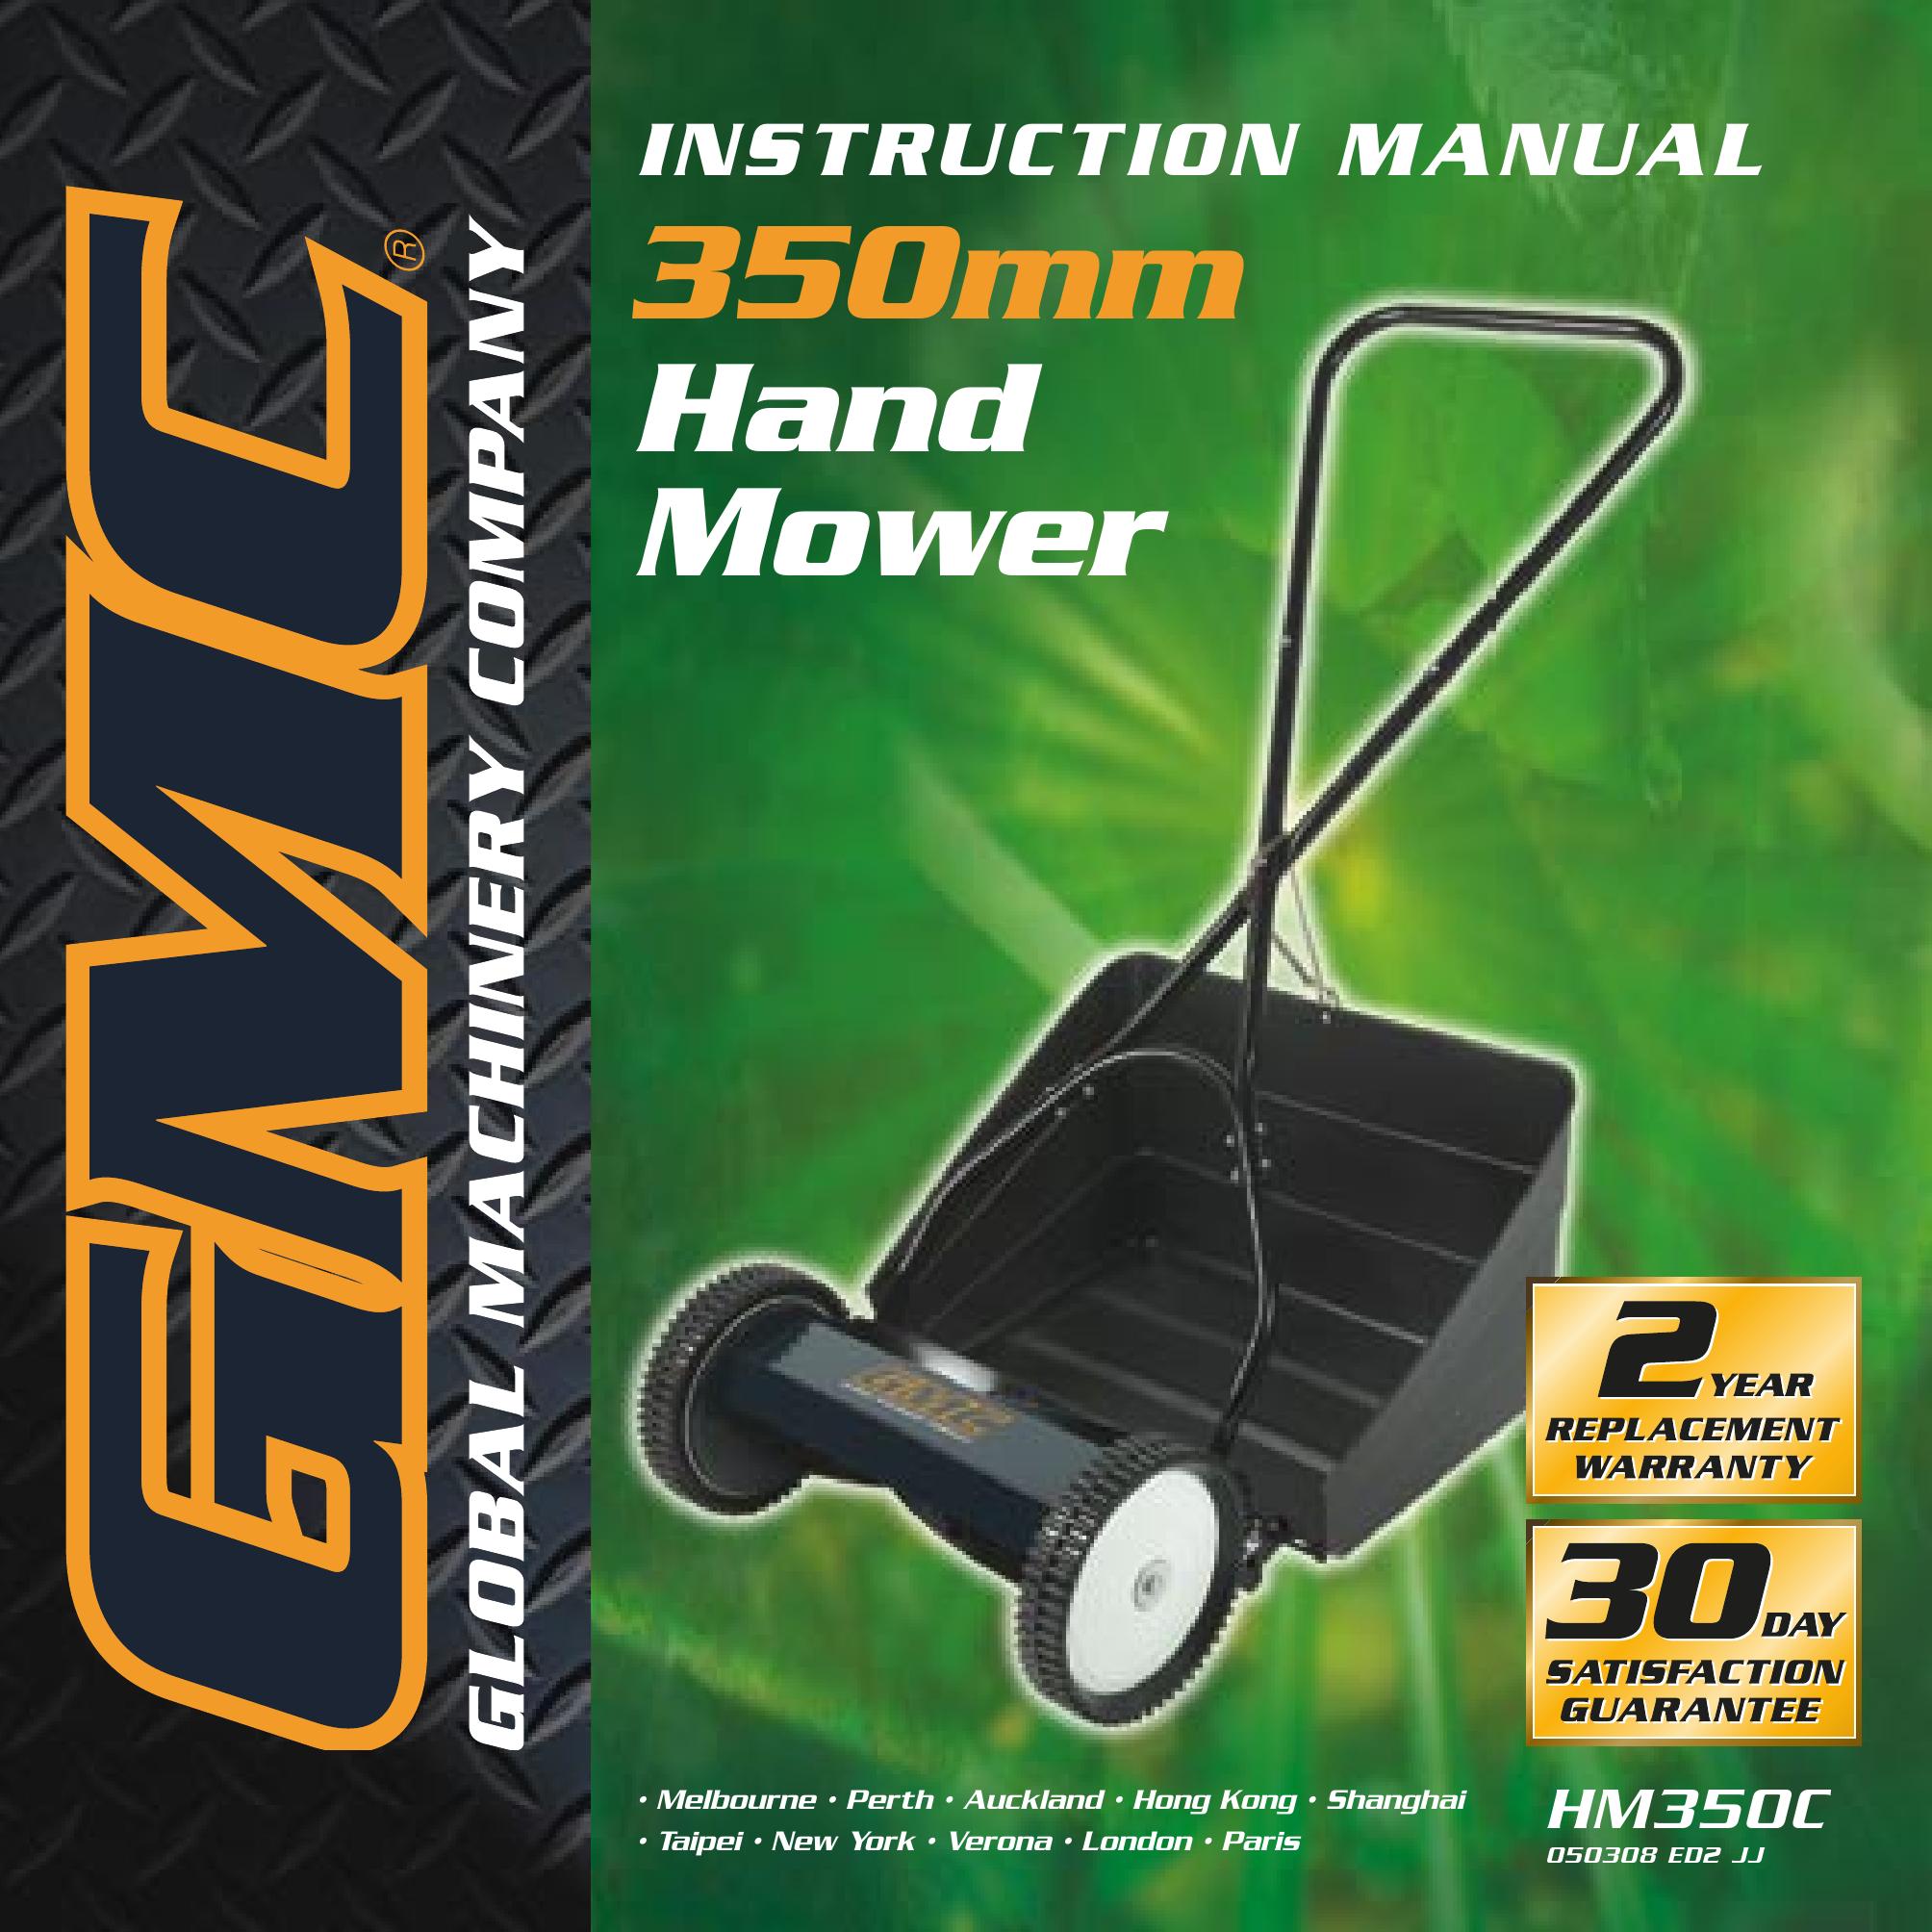 Global Machinery Company HM 350C Lawn Mower User Manual